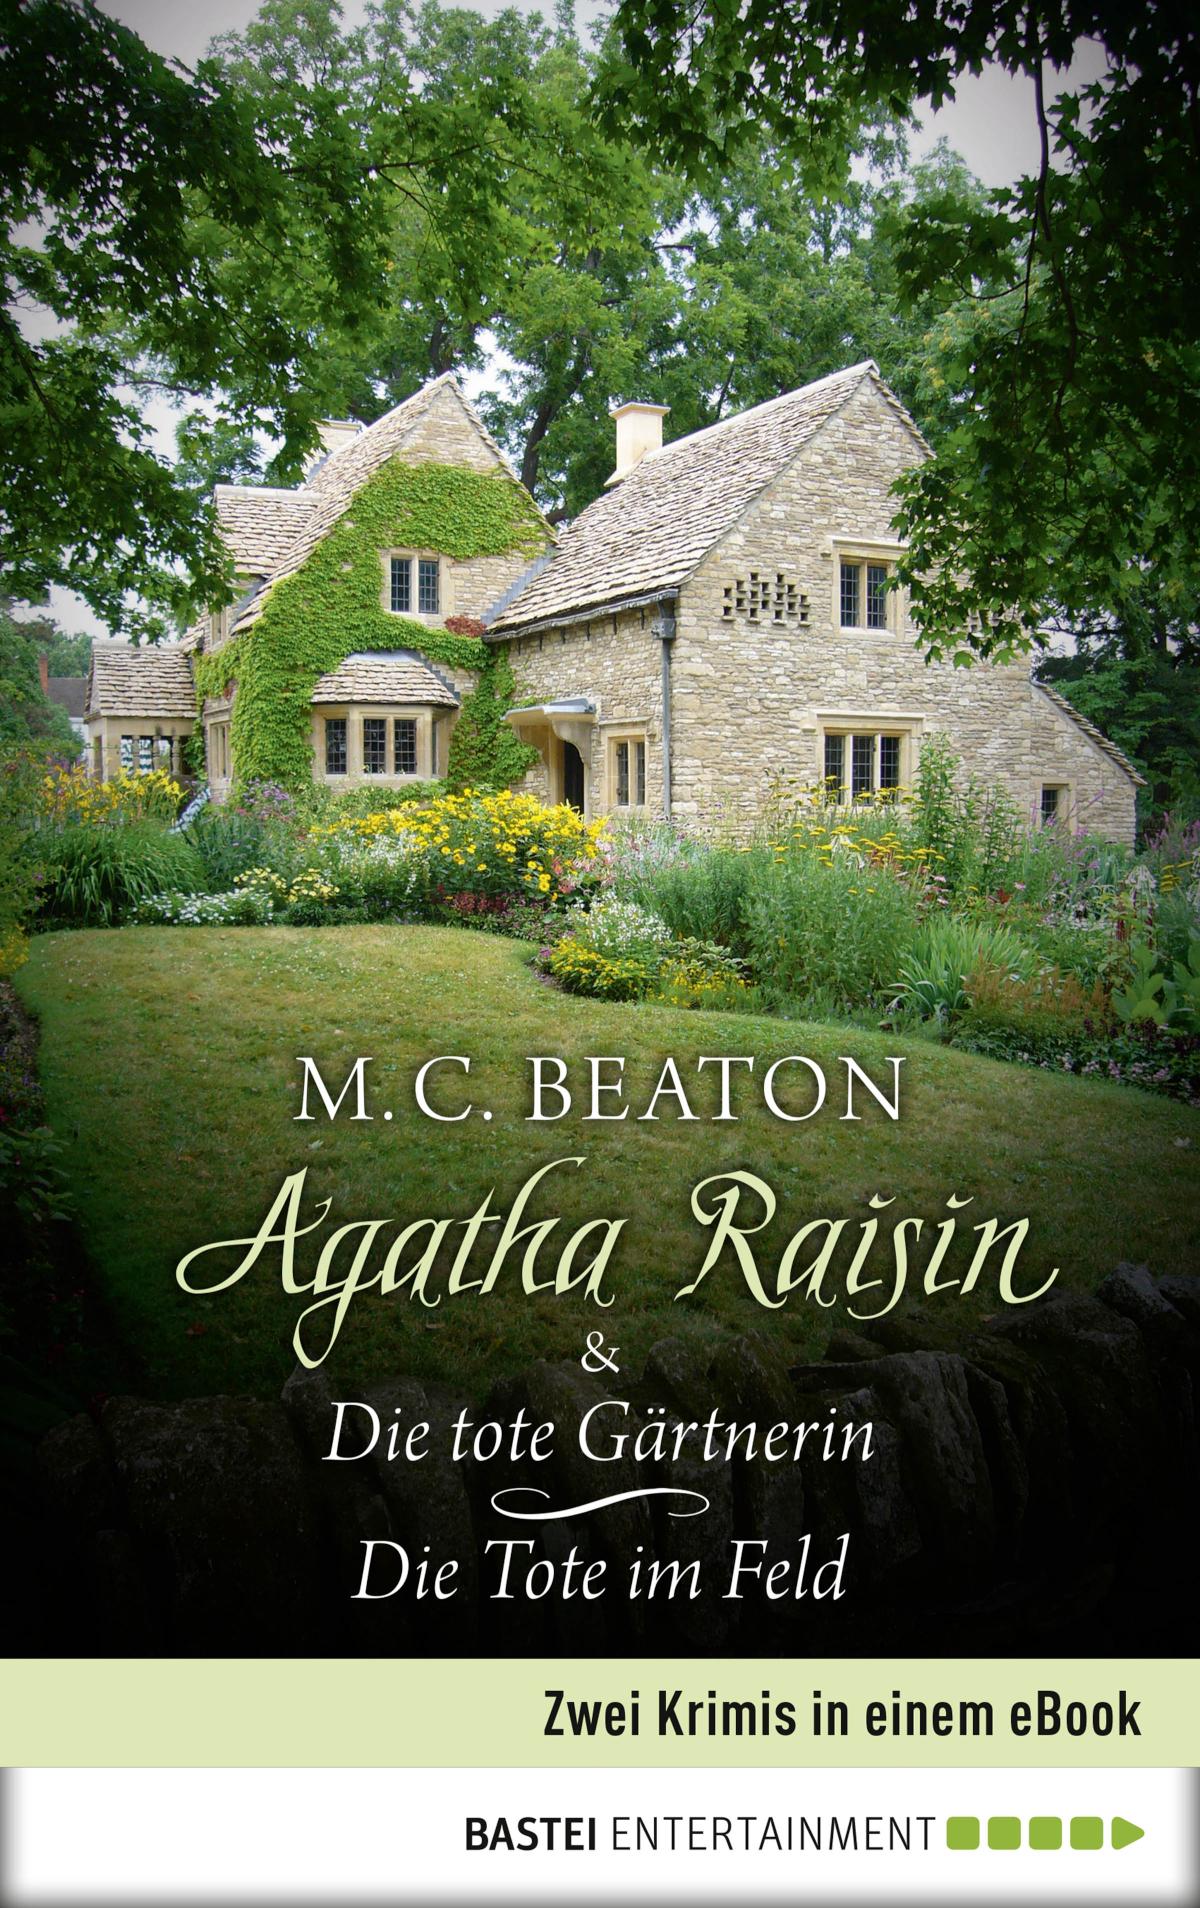 Agatha Raisin& Die tote Gärtnerin / Die Tote im Feld Zwei Krimis in einem eBook